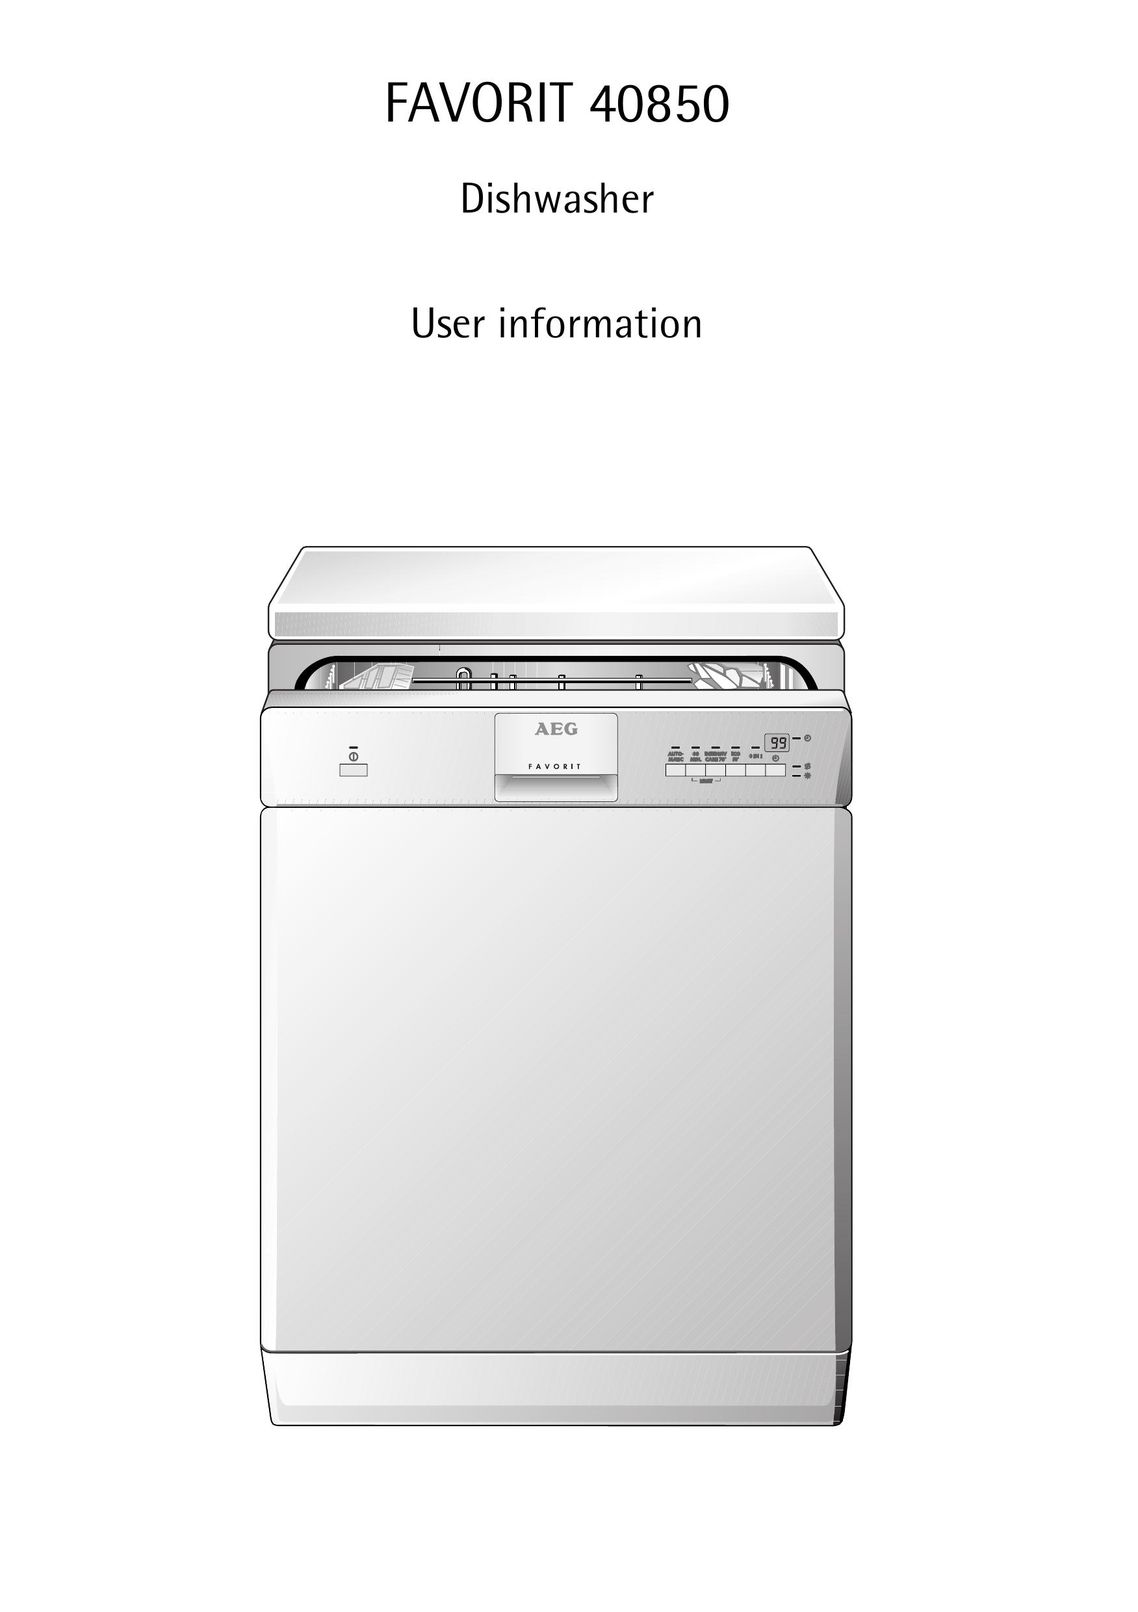 AEG 40850 Dishwasher User Manual